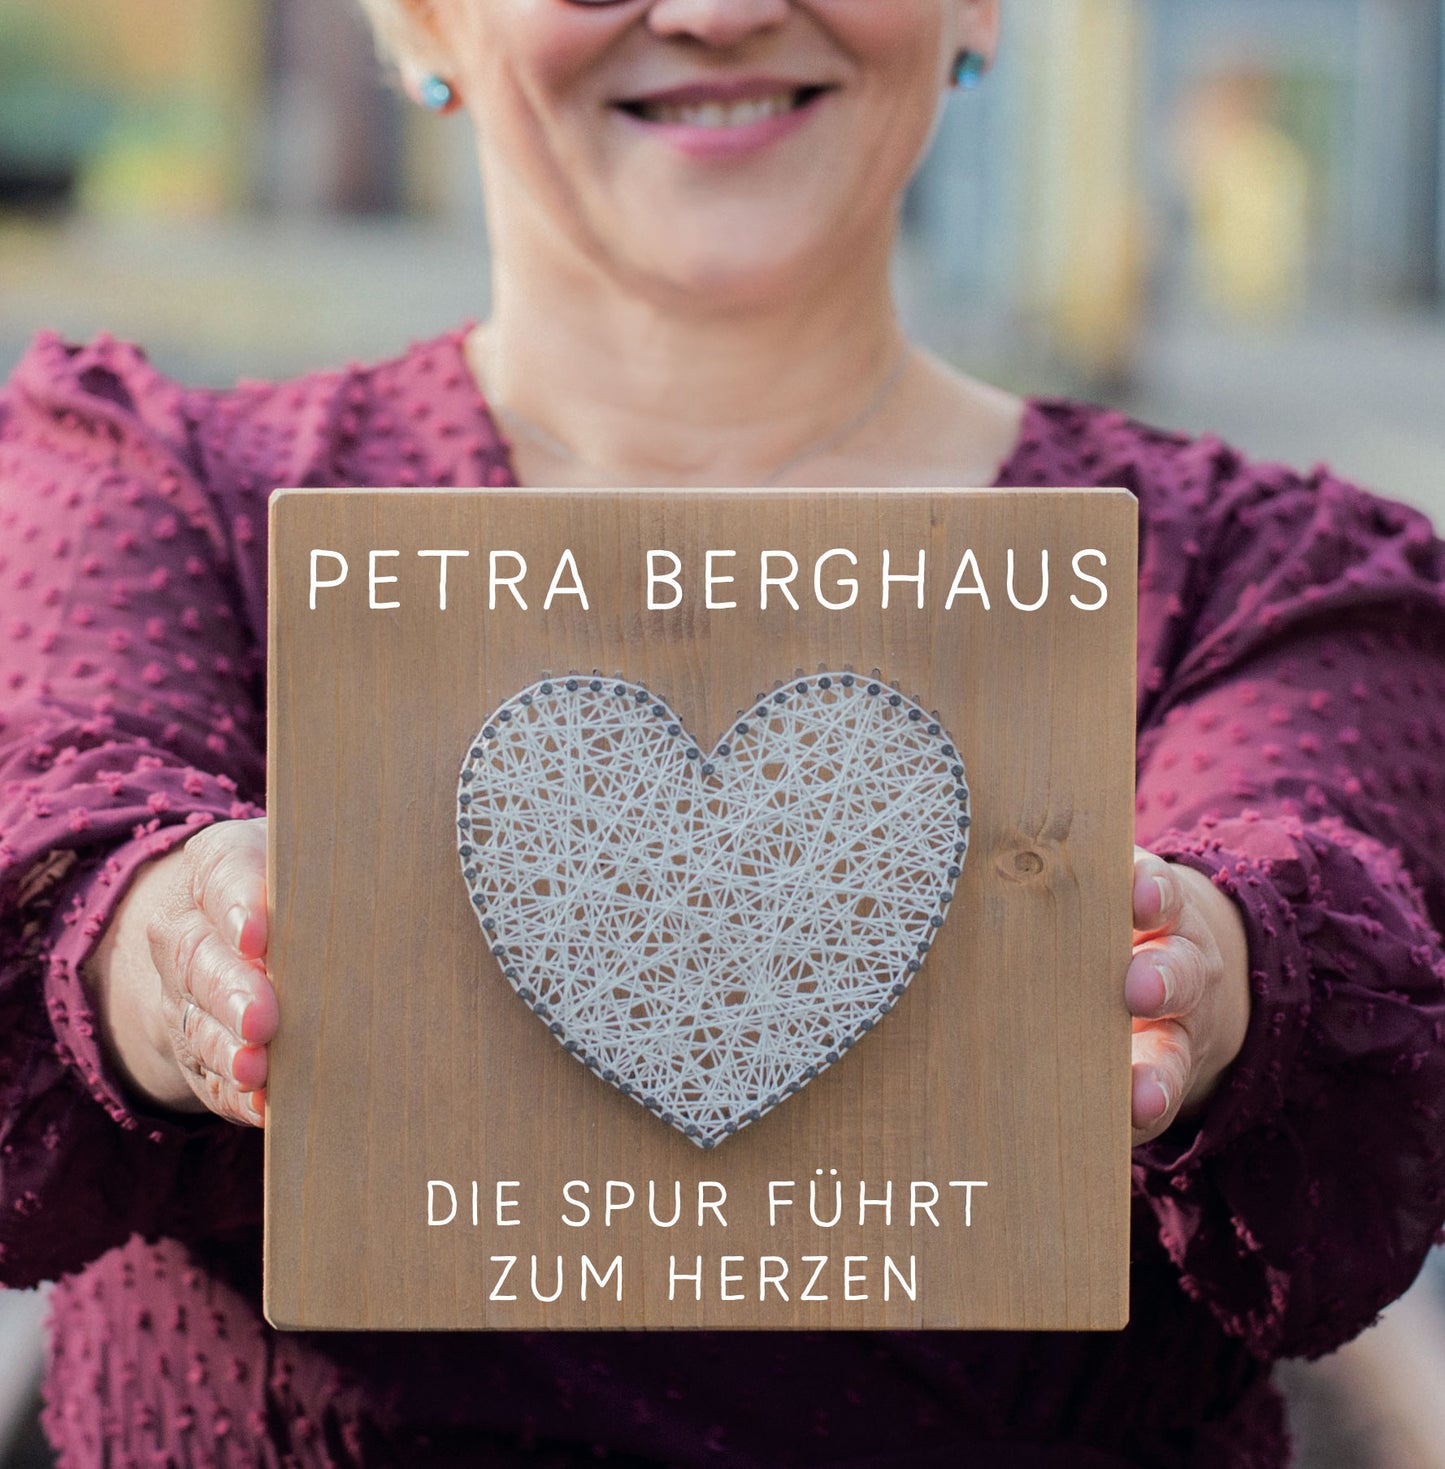 Petras Solo-CD "Die Spur führt zum Herzen" plus Download